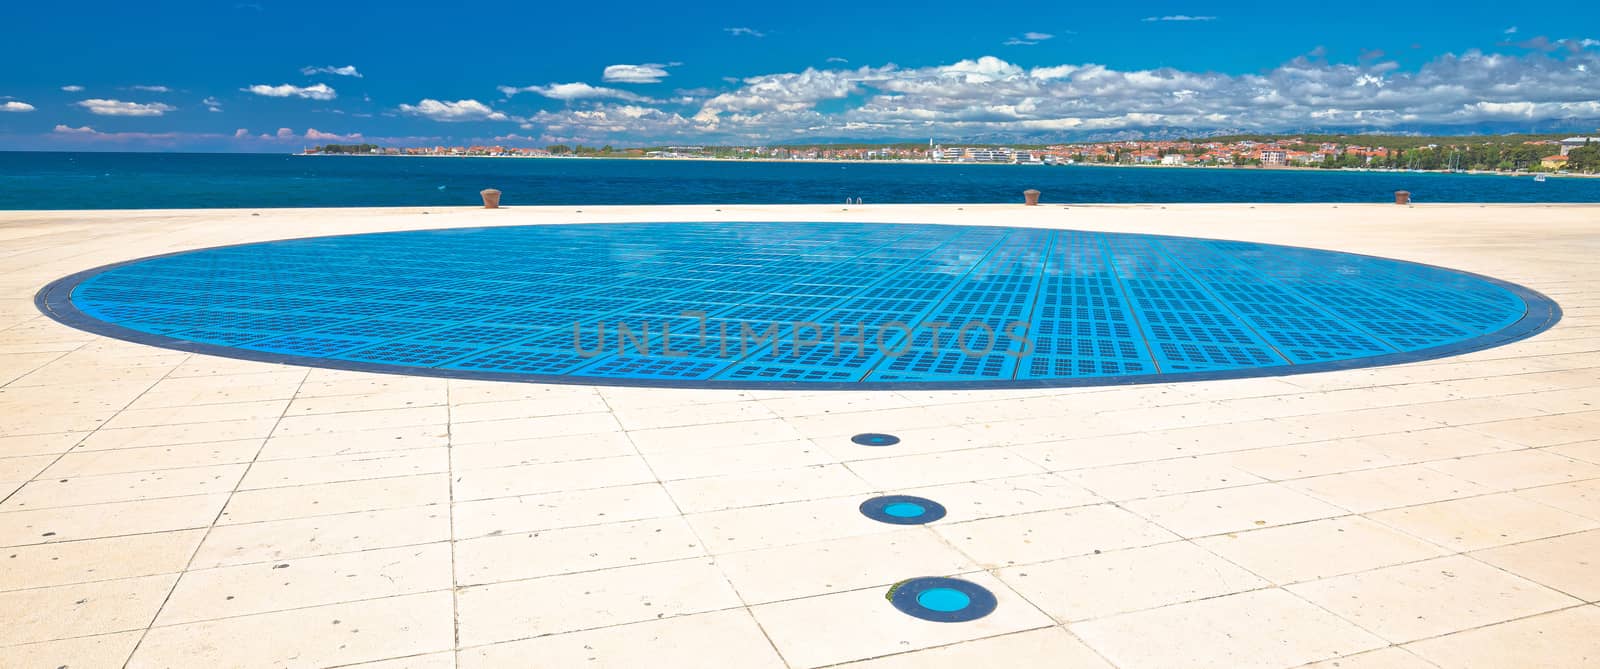 Zadar. Famous Greetings to the sun Zadar solar powered tourist installation panoramic view, Dalmatia region of Croatia